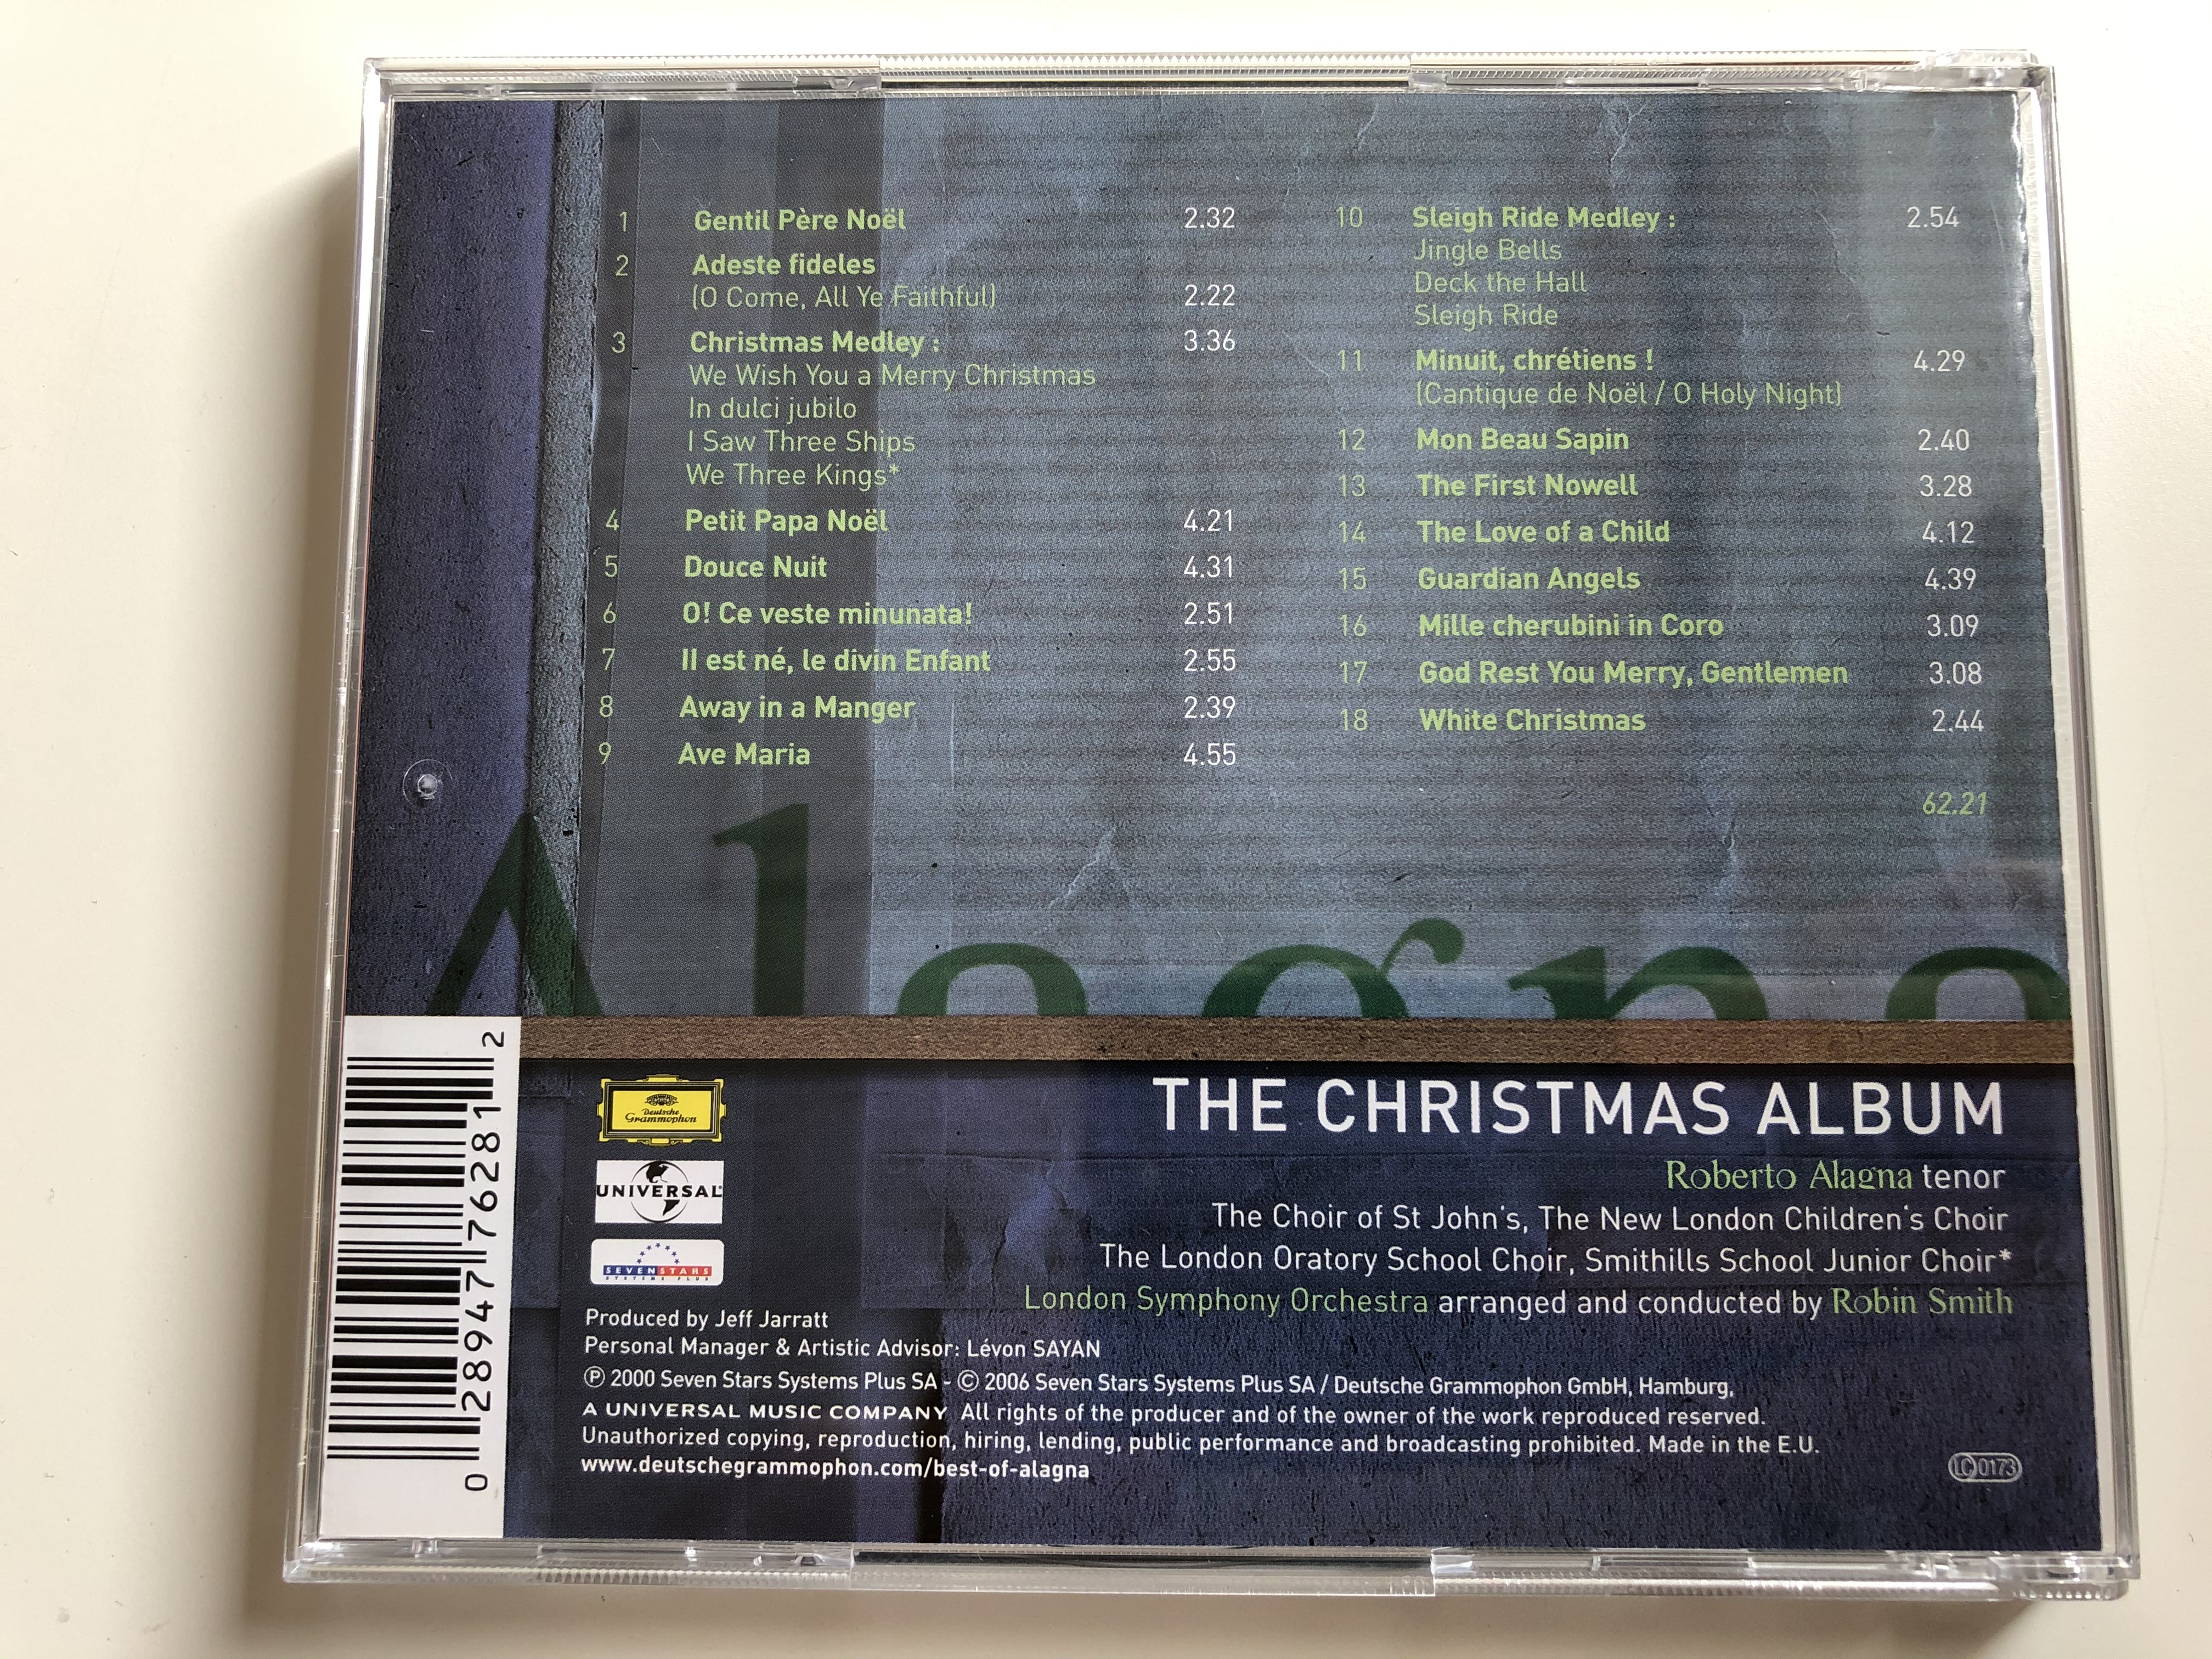 roberto-alagna-the-christmas-album-robin-smith-london-symphony-orchestra-deutsche-grammophon-audio-cd-2006-00289-477-6281-3-.jpg